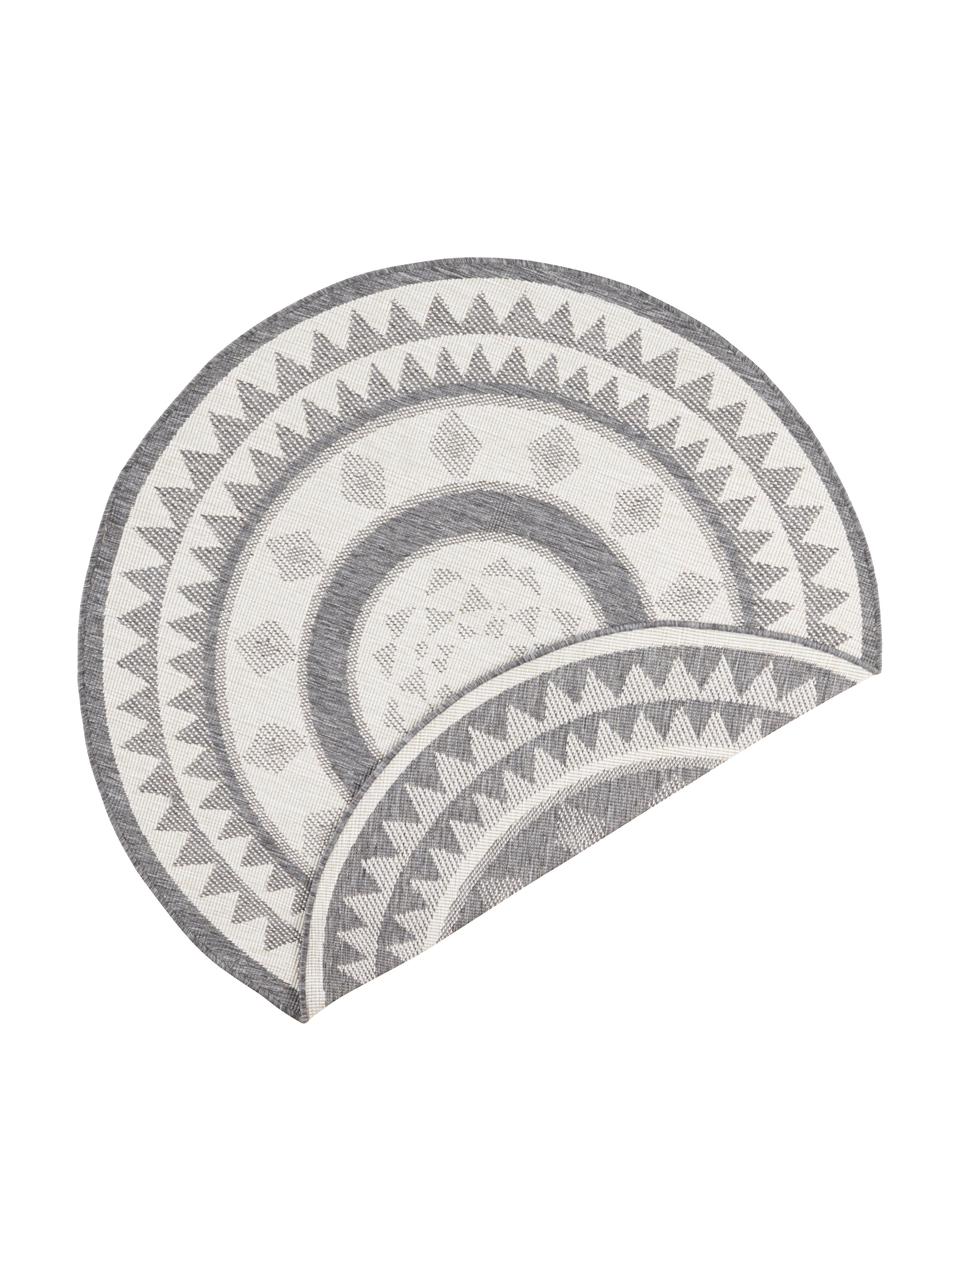 Alfombra redonda reversible de interior/exterior Jamaica, Gris, crema, Ø 140 cm (Tamaño M)